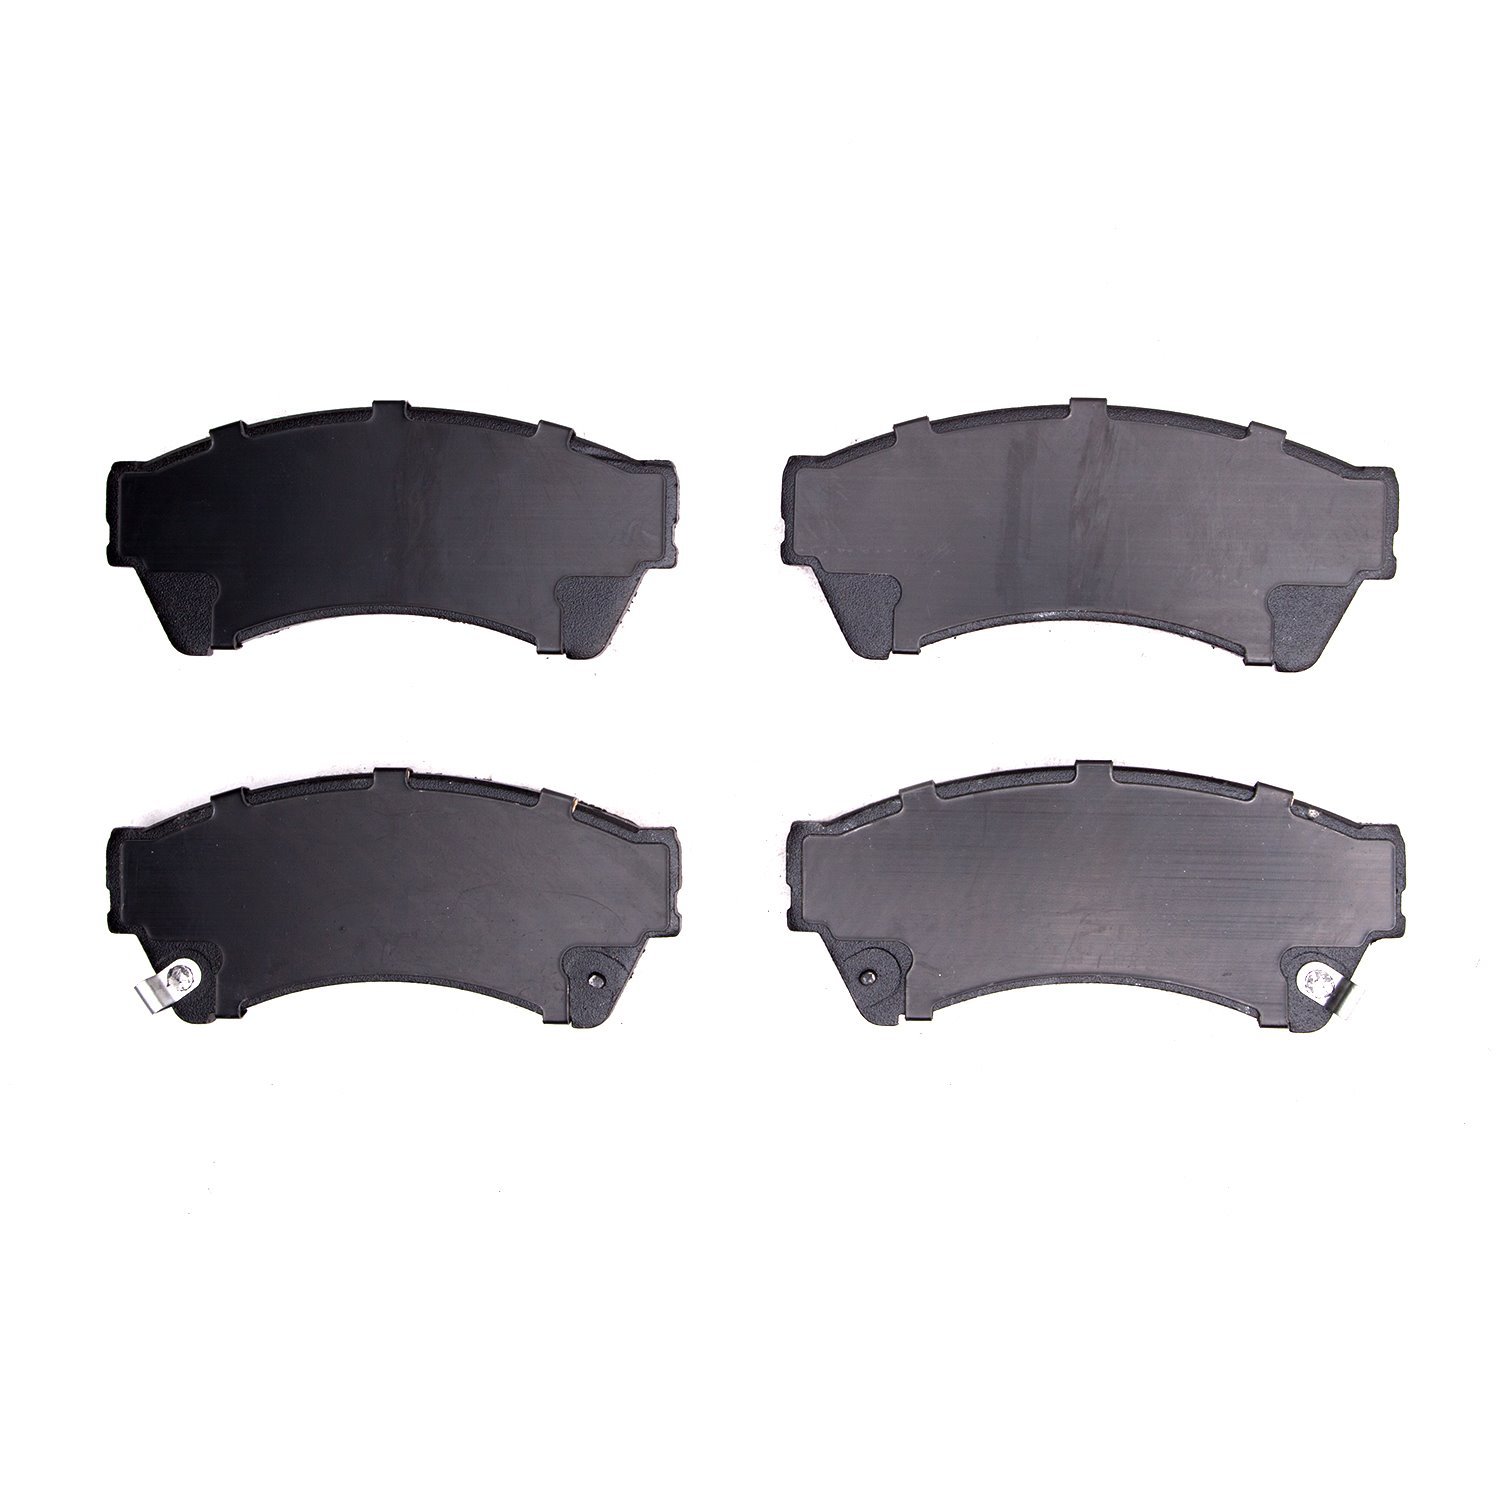 1551-1164-00 5000 Advanced Ceramic Brake Pads, 2006-2013 Ford/Lincoln/Mercury/Mazda, Position: Front